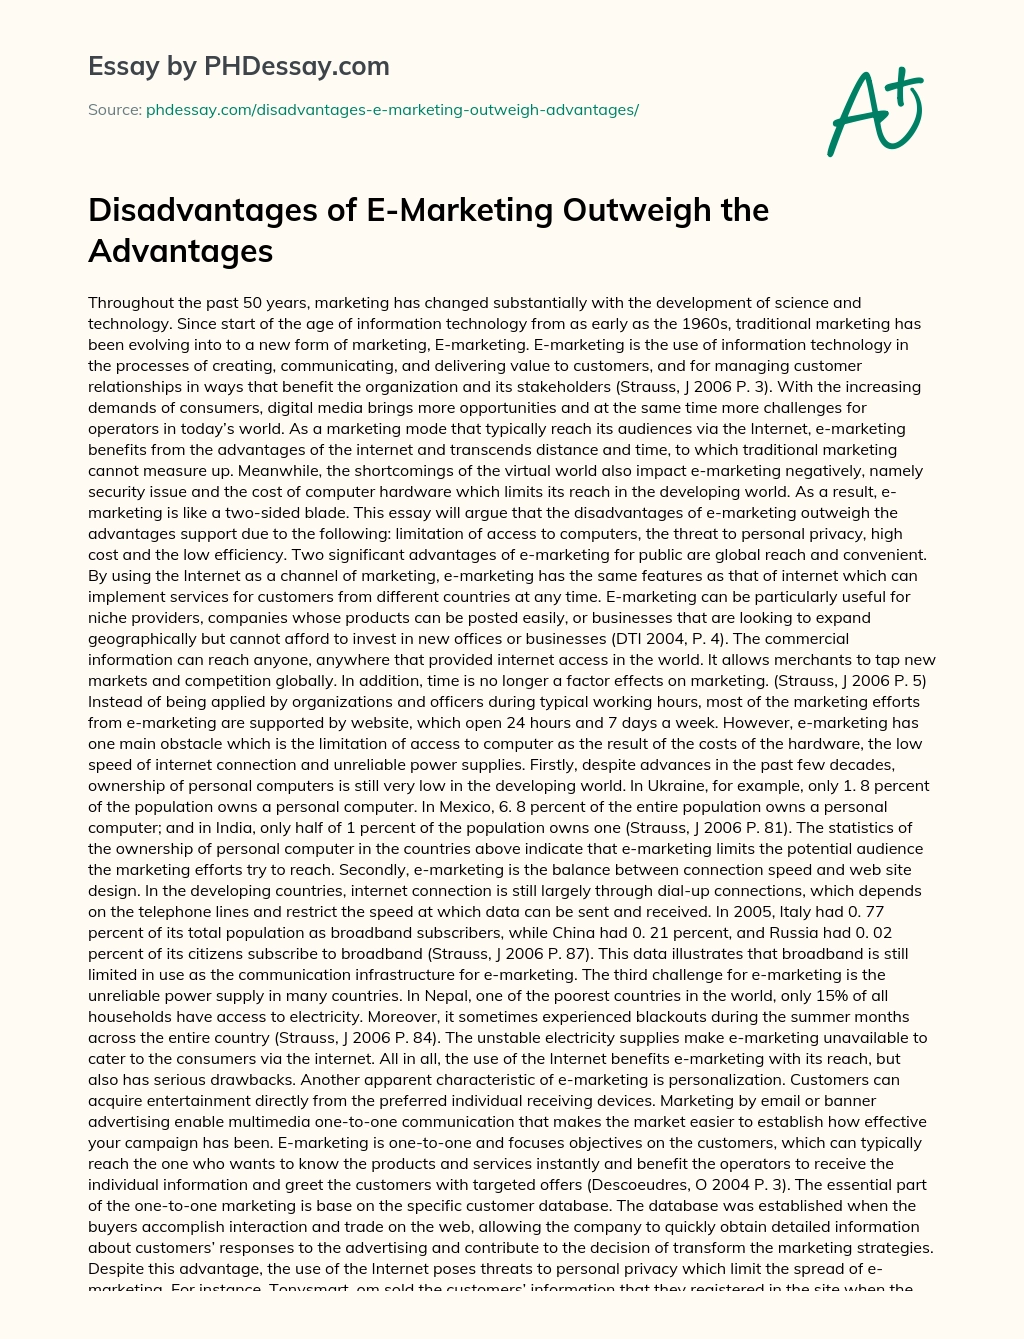 Disadvantages of E-Marketing Outweigh the Advantages essay